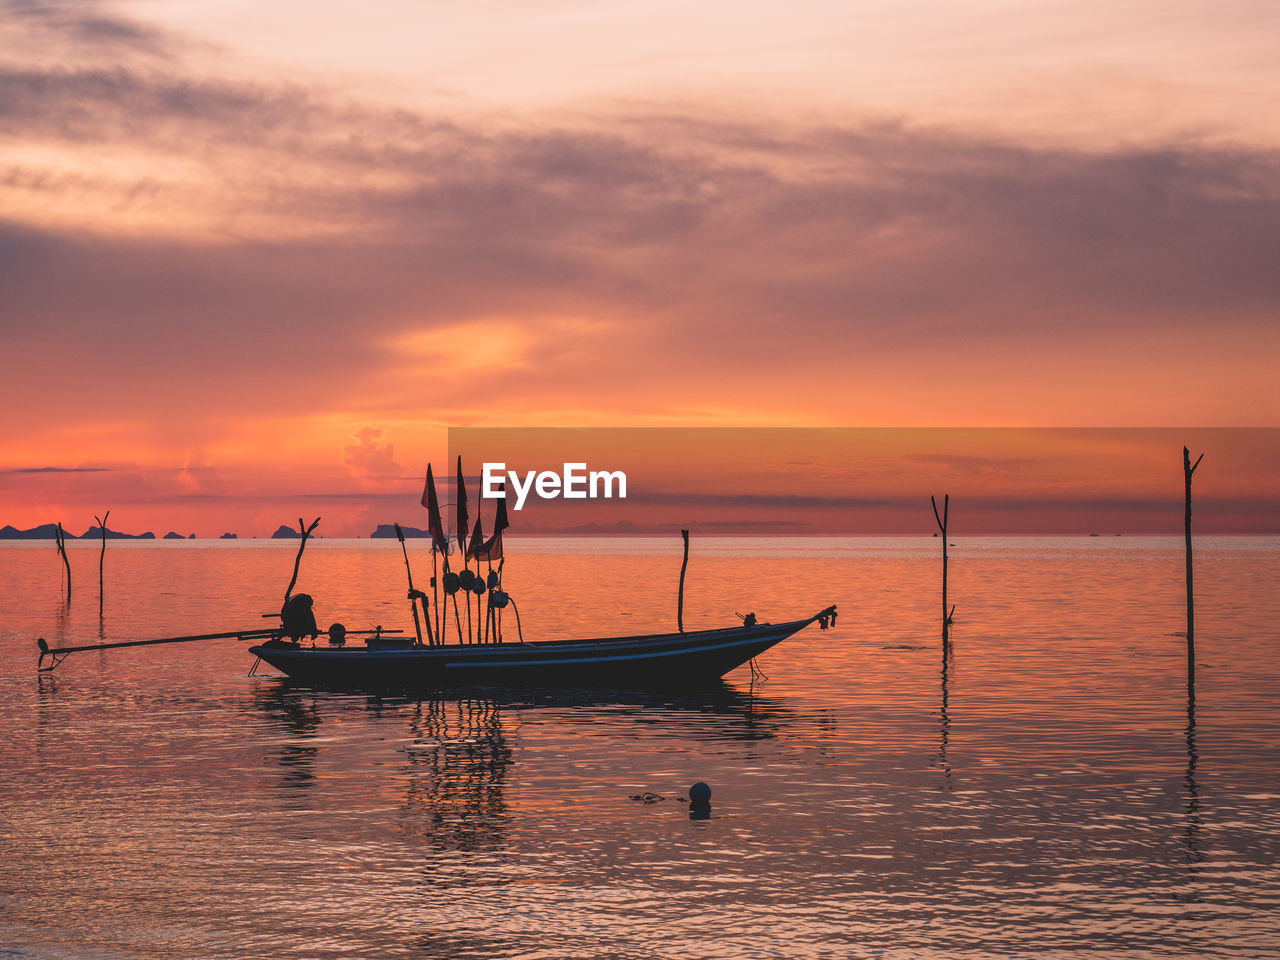 Sunset in beautiful twilight orange sky with local's fishing boat silhouette. koh samui , thailand.